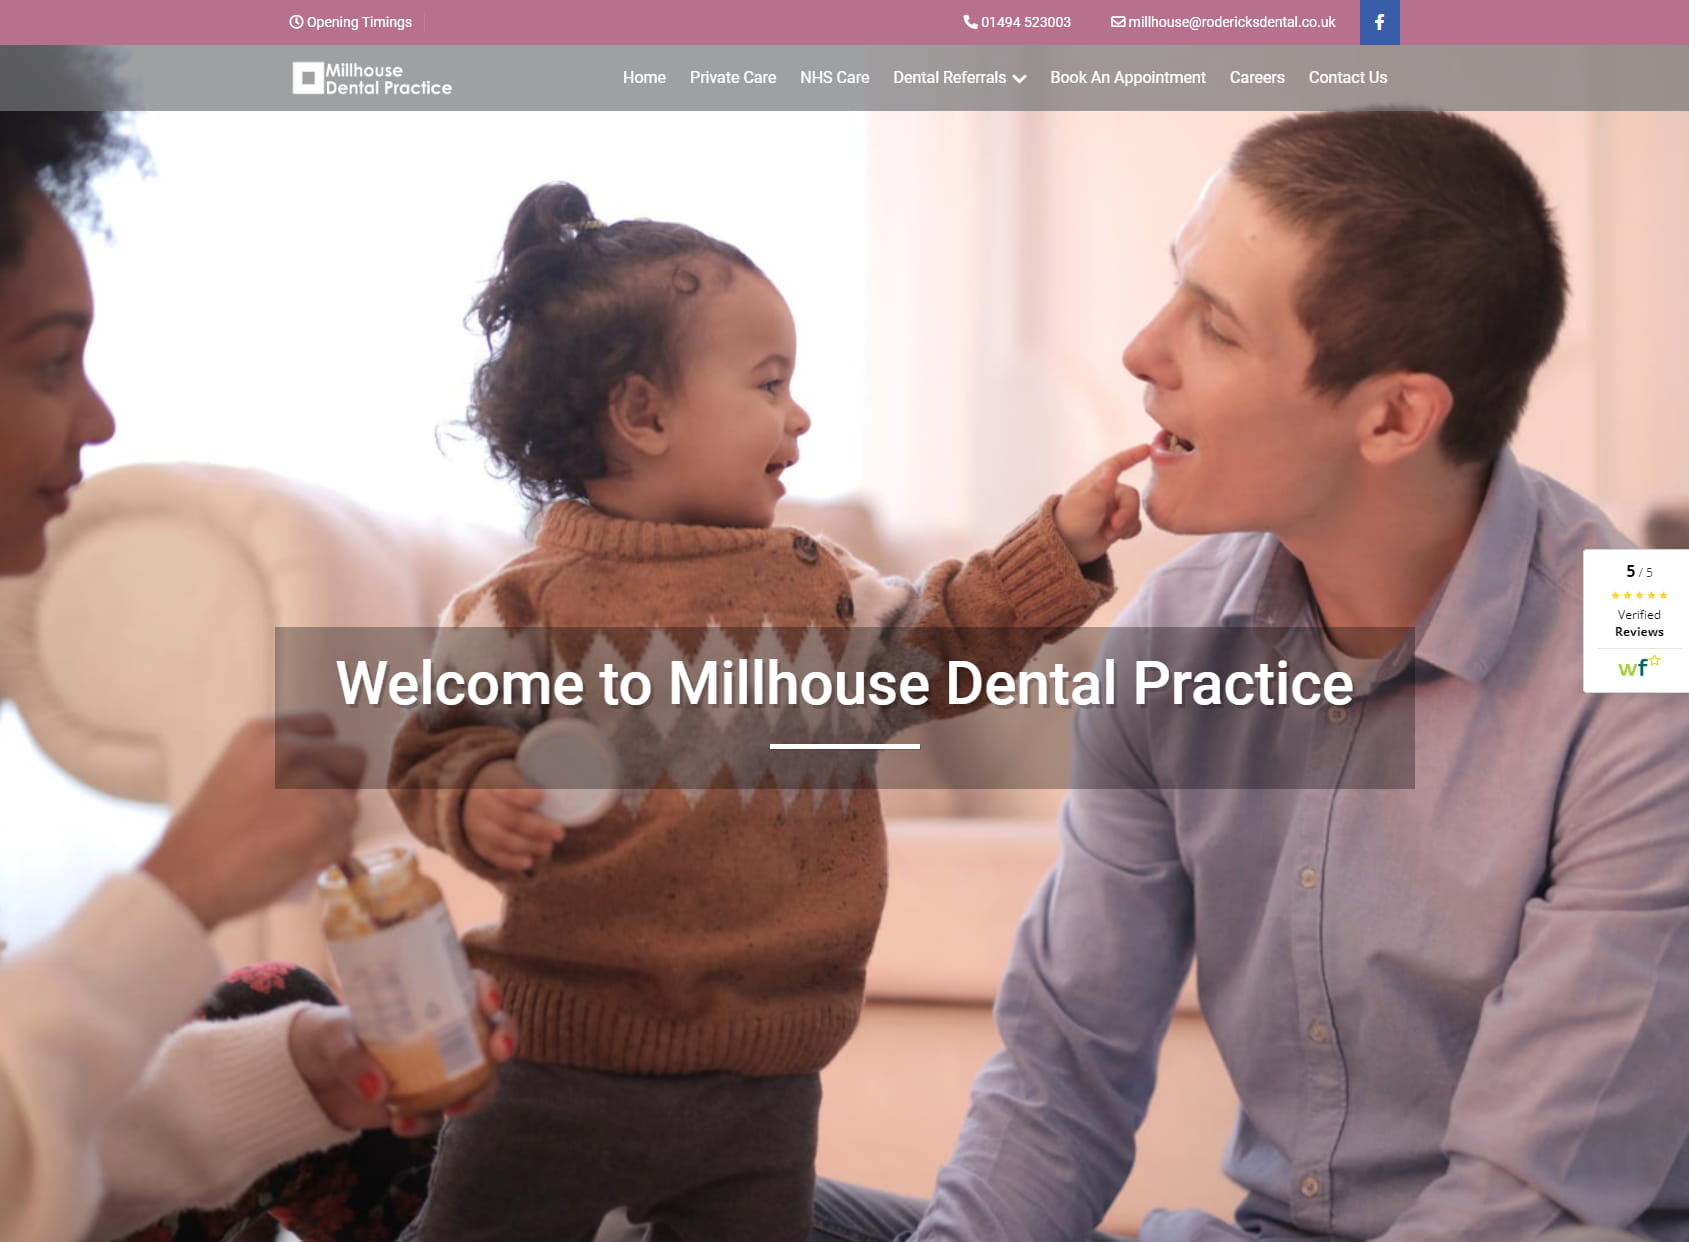 Millhouse Dental Practice